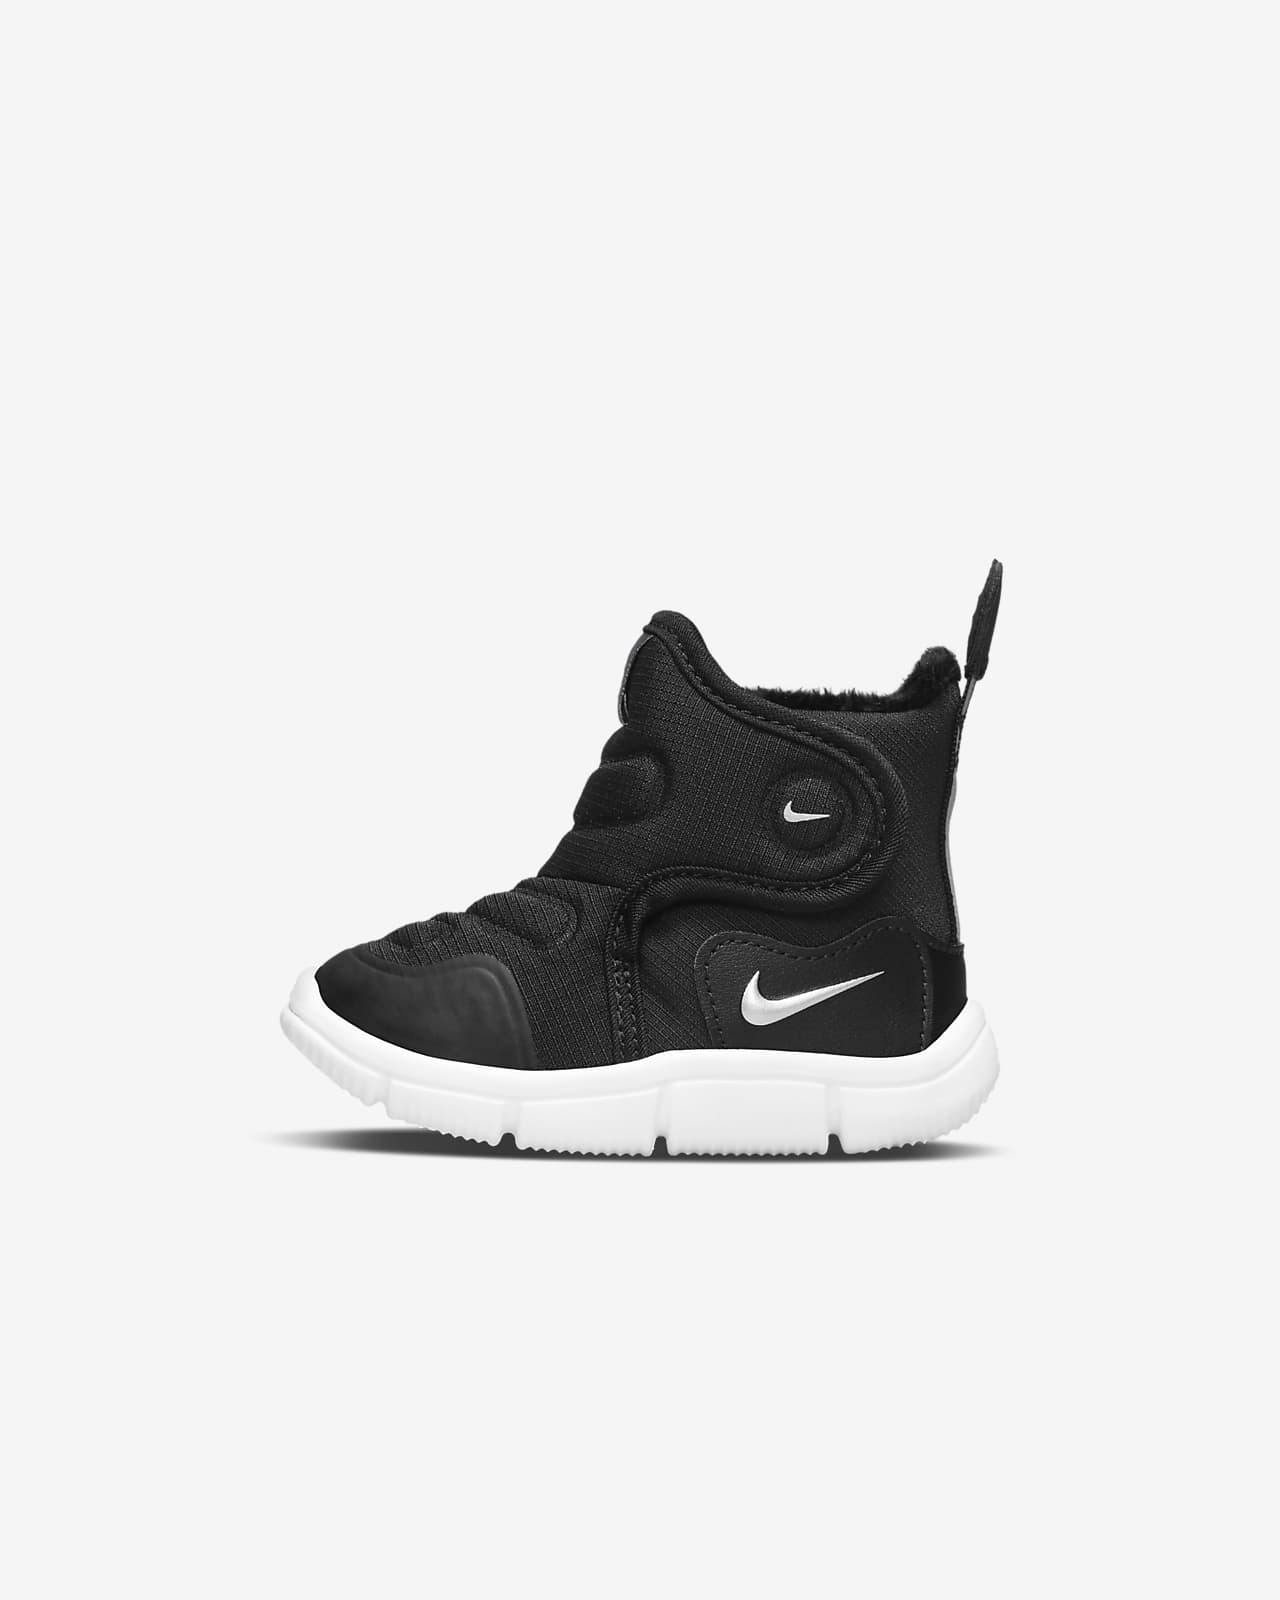 Nike Novice Baby/Toddler Boots